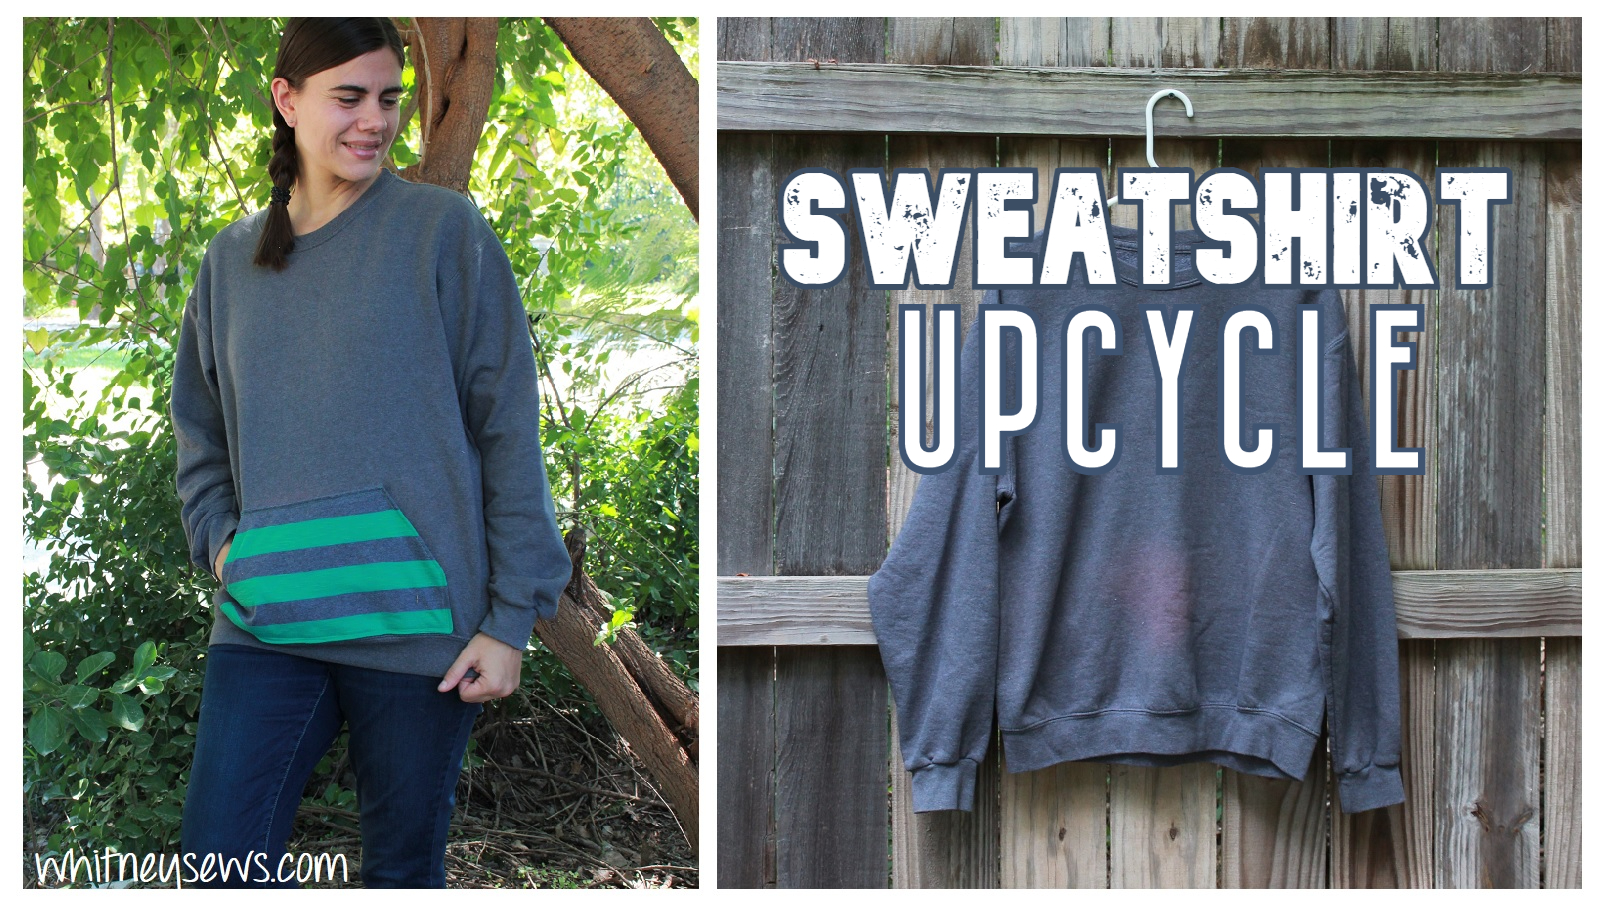 EASY Sweatshirt - Whitney Pocket Sews Kangaroo Upcycle -